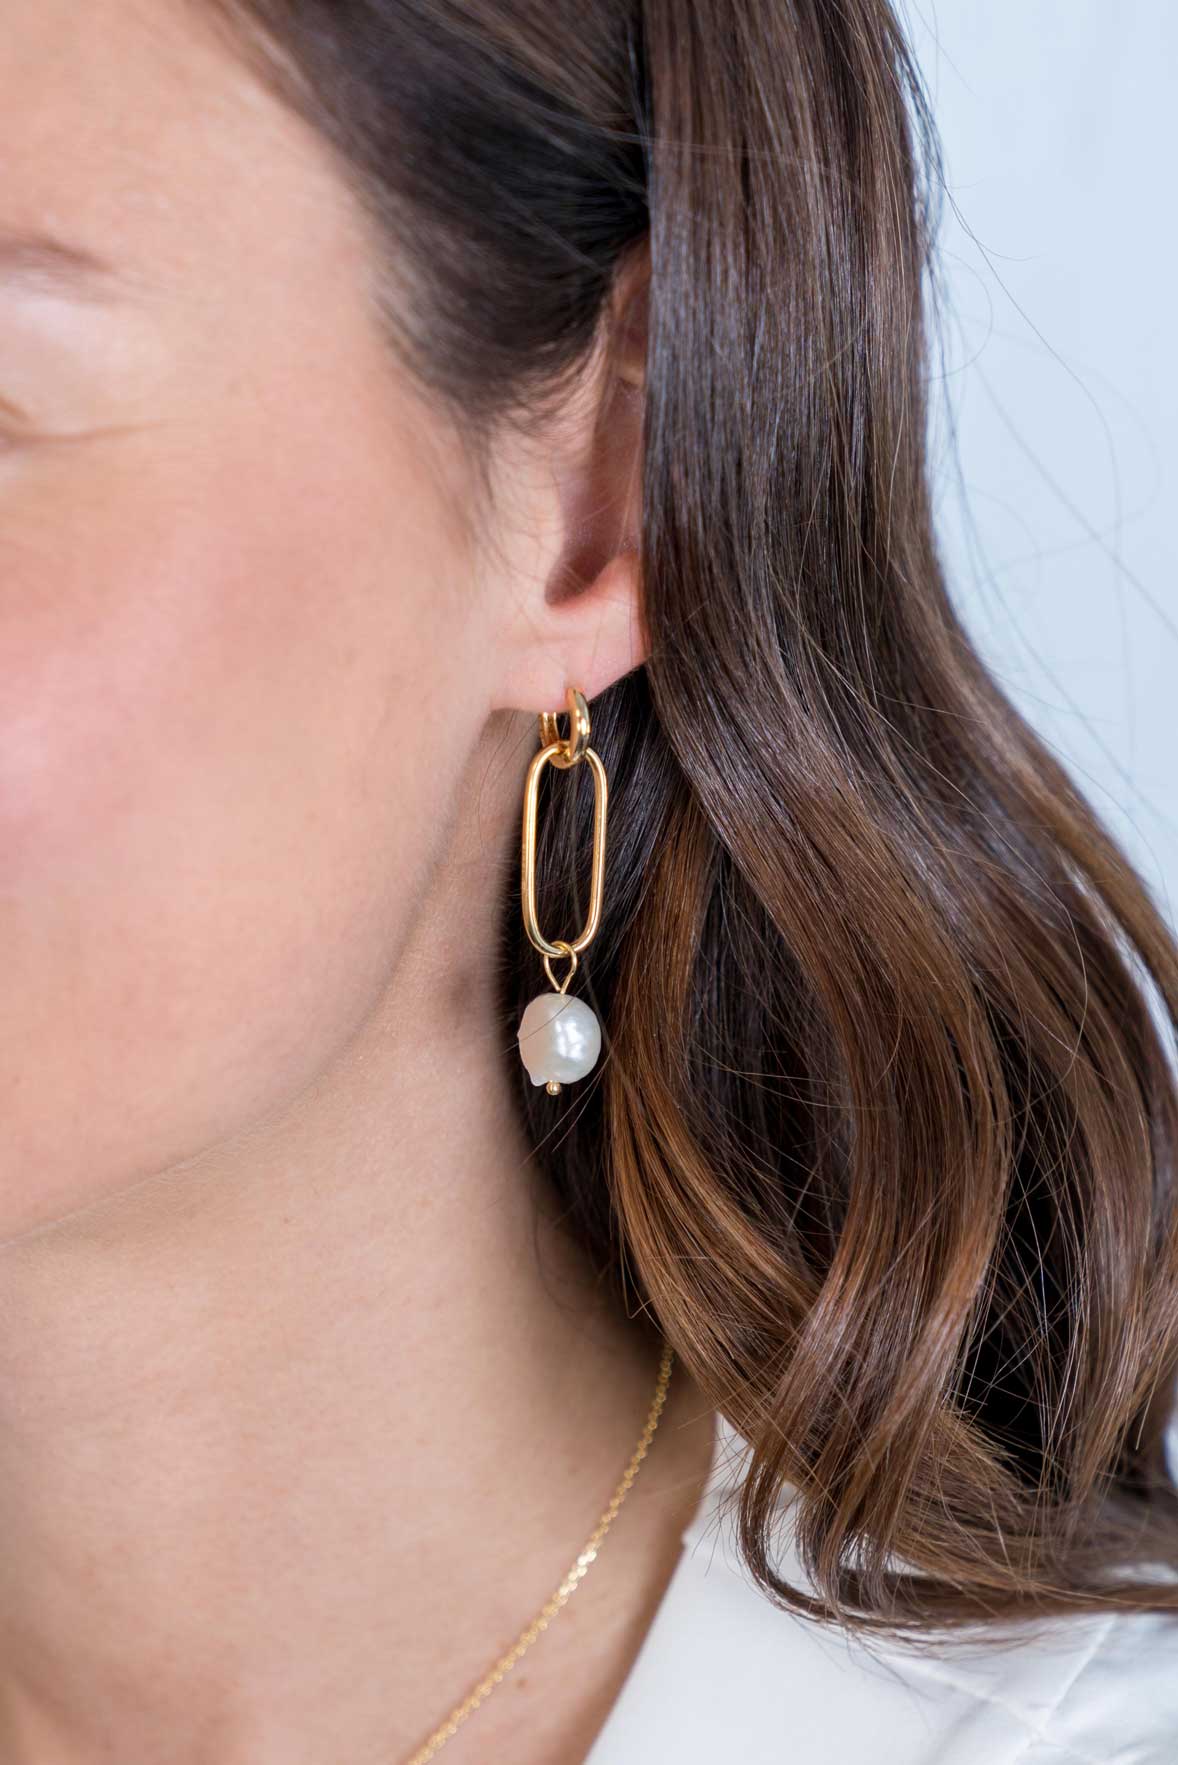 43mm ZINZI Gold Plated Sterling Silver Earrings Pendants Oval White Pearl ZICH2188G (excl. hoop earrings)